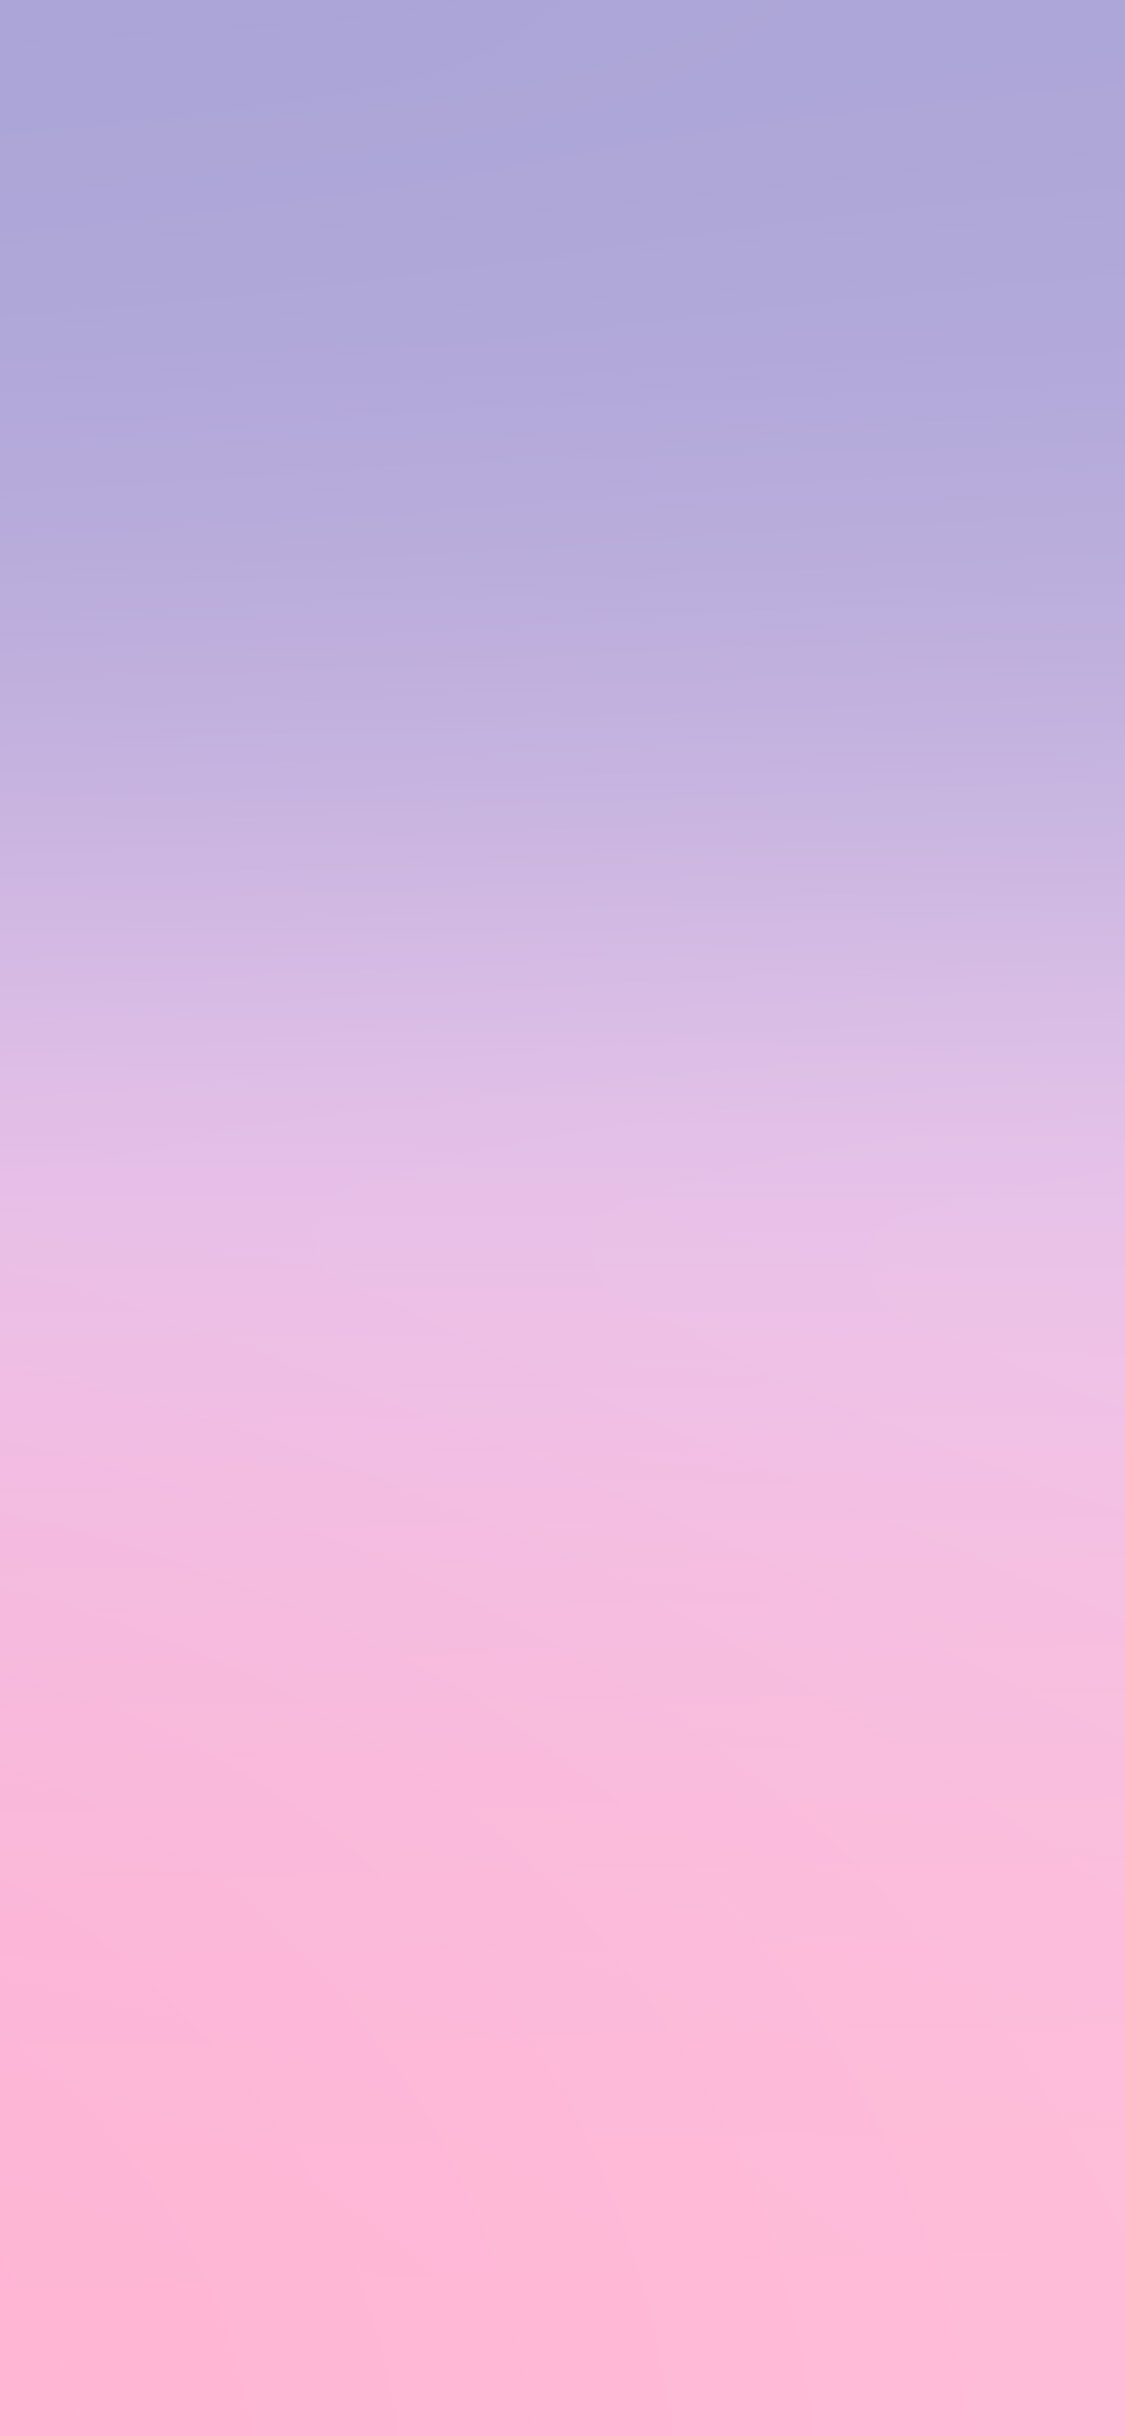 iPhone X wallpaper. blur gradation pink purple pastel